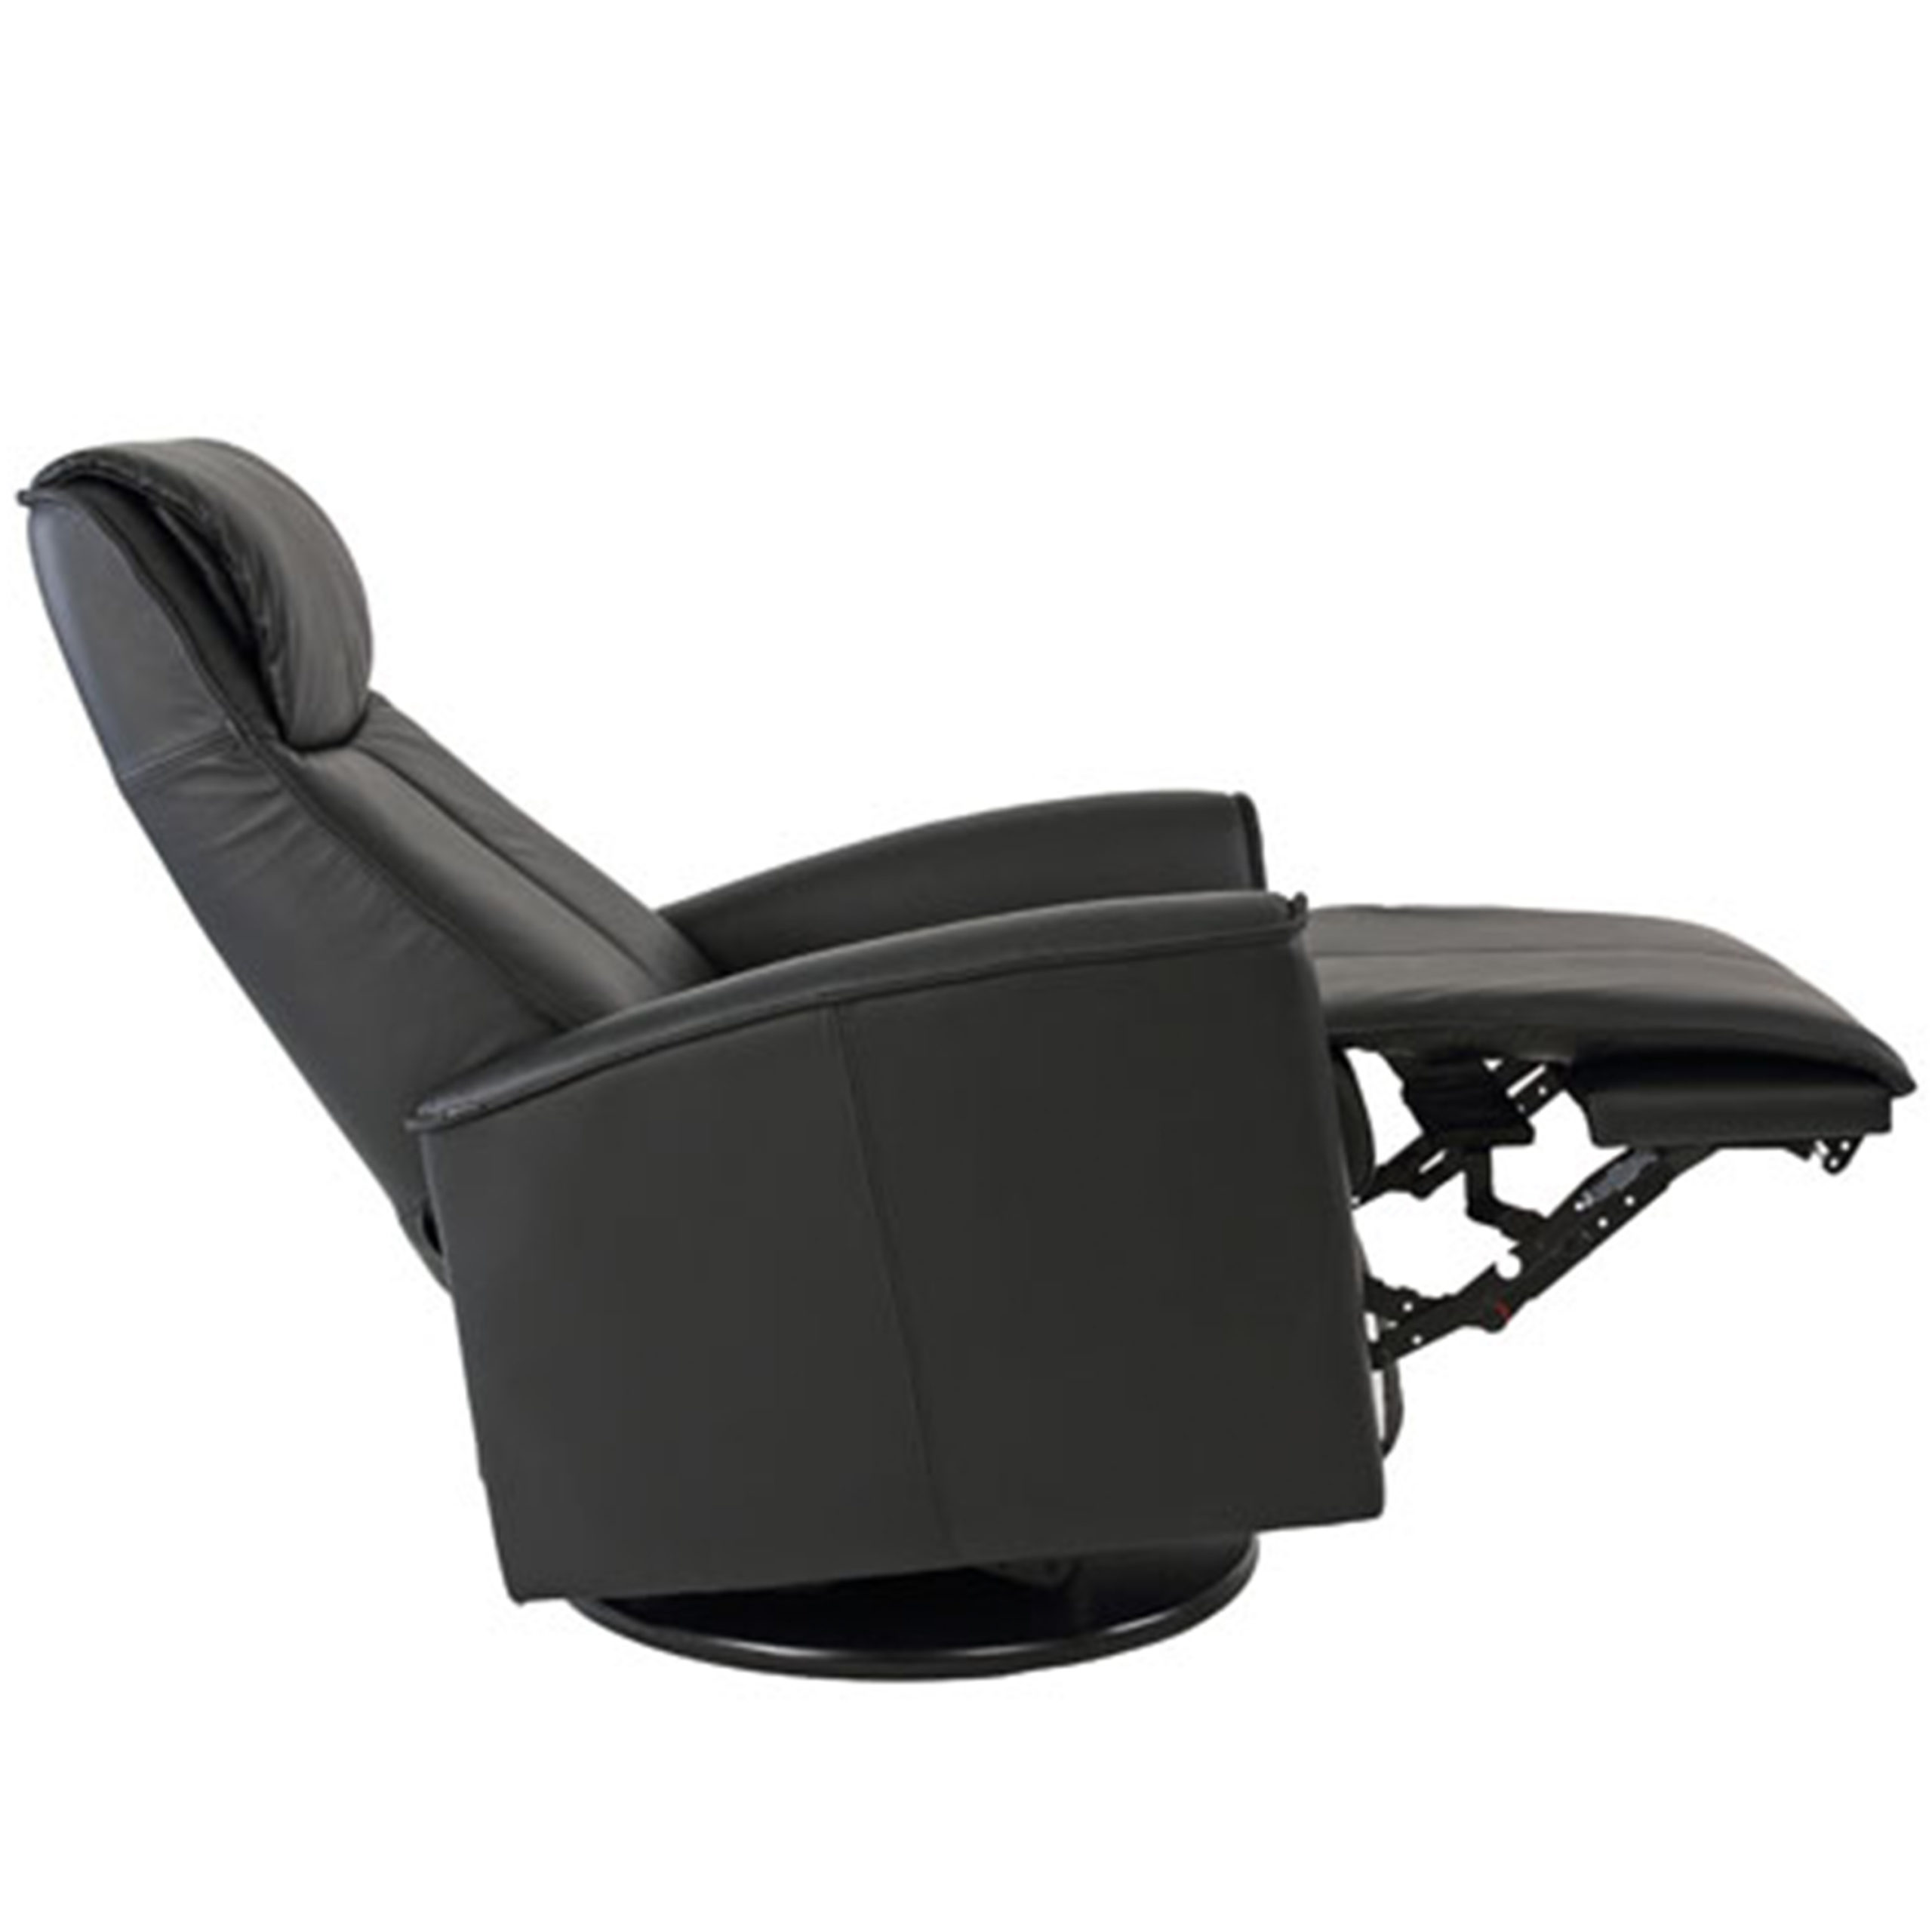 Harmony Medical Spa Chair - Michele Pelafas